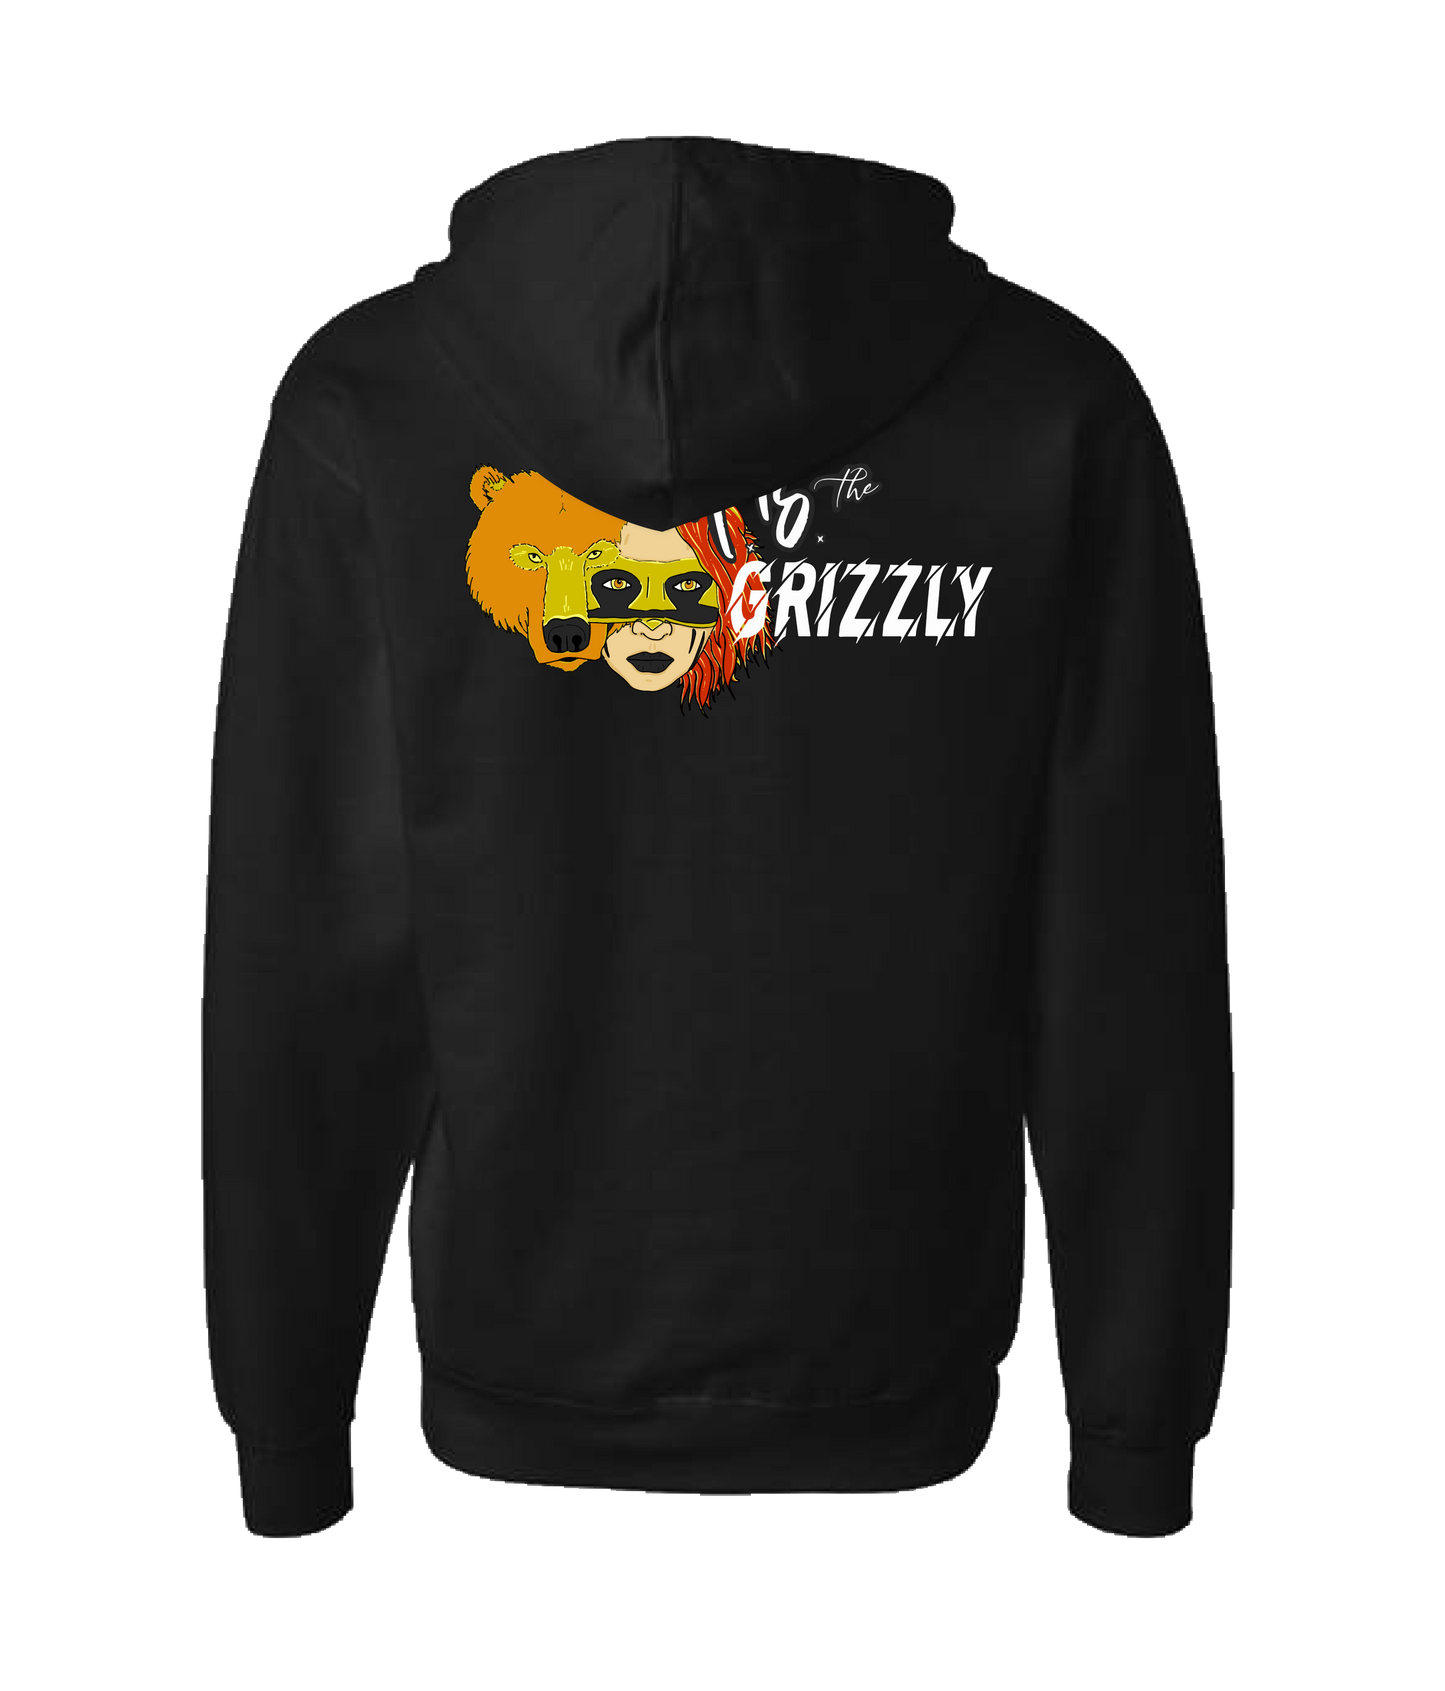 HB The Grizzly - HB&G - Black Zip Up Hoodie